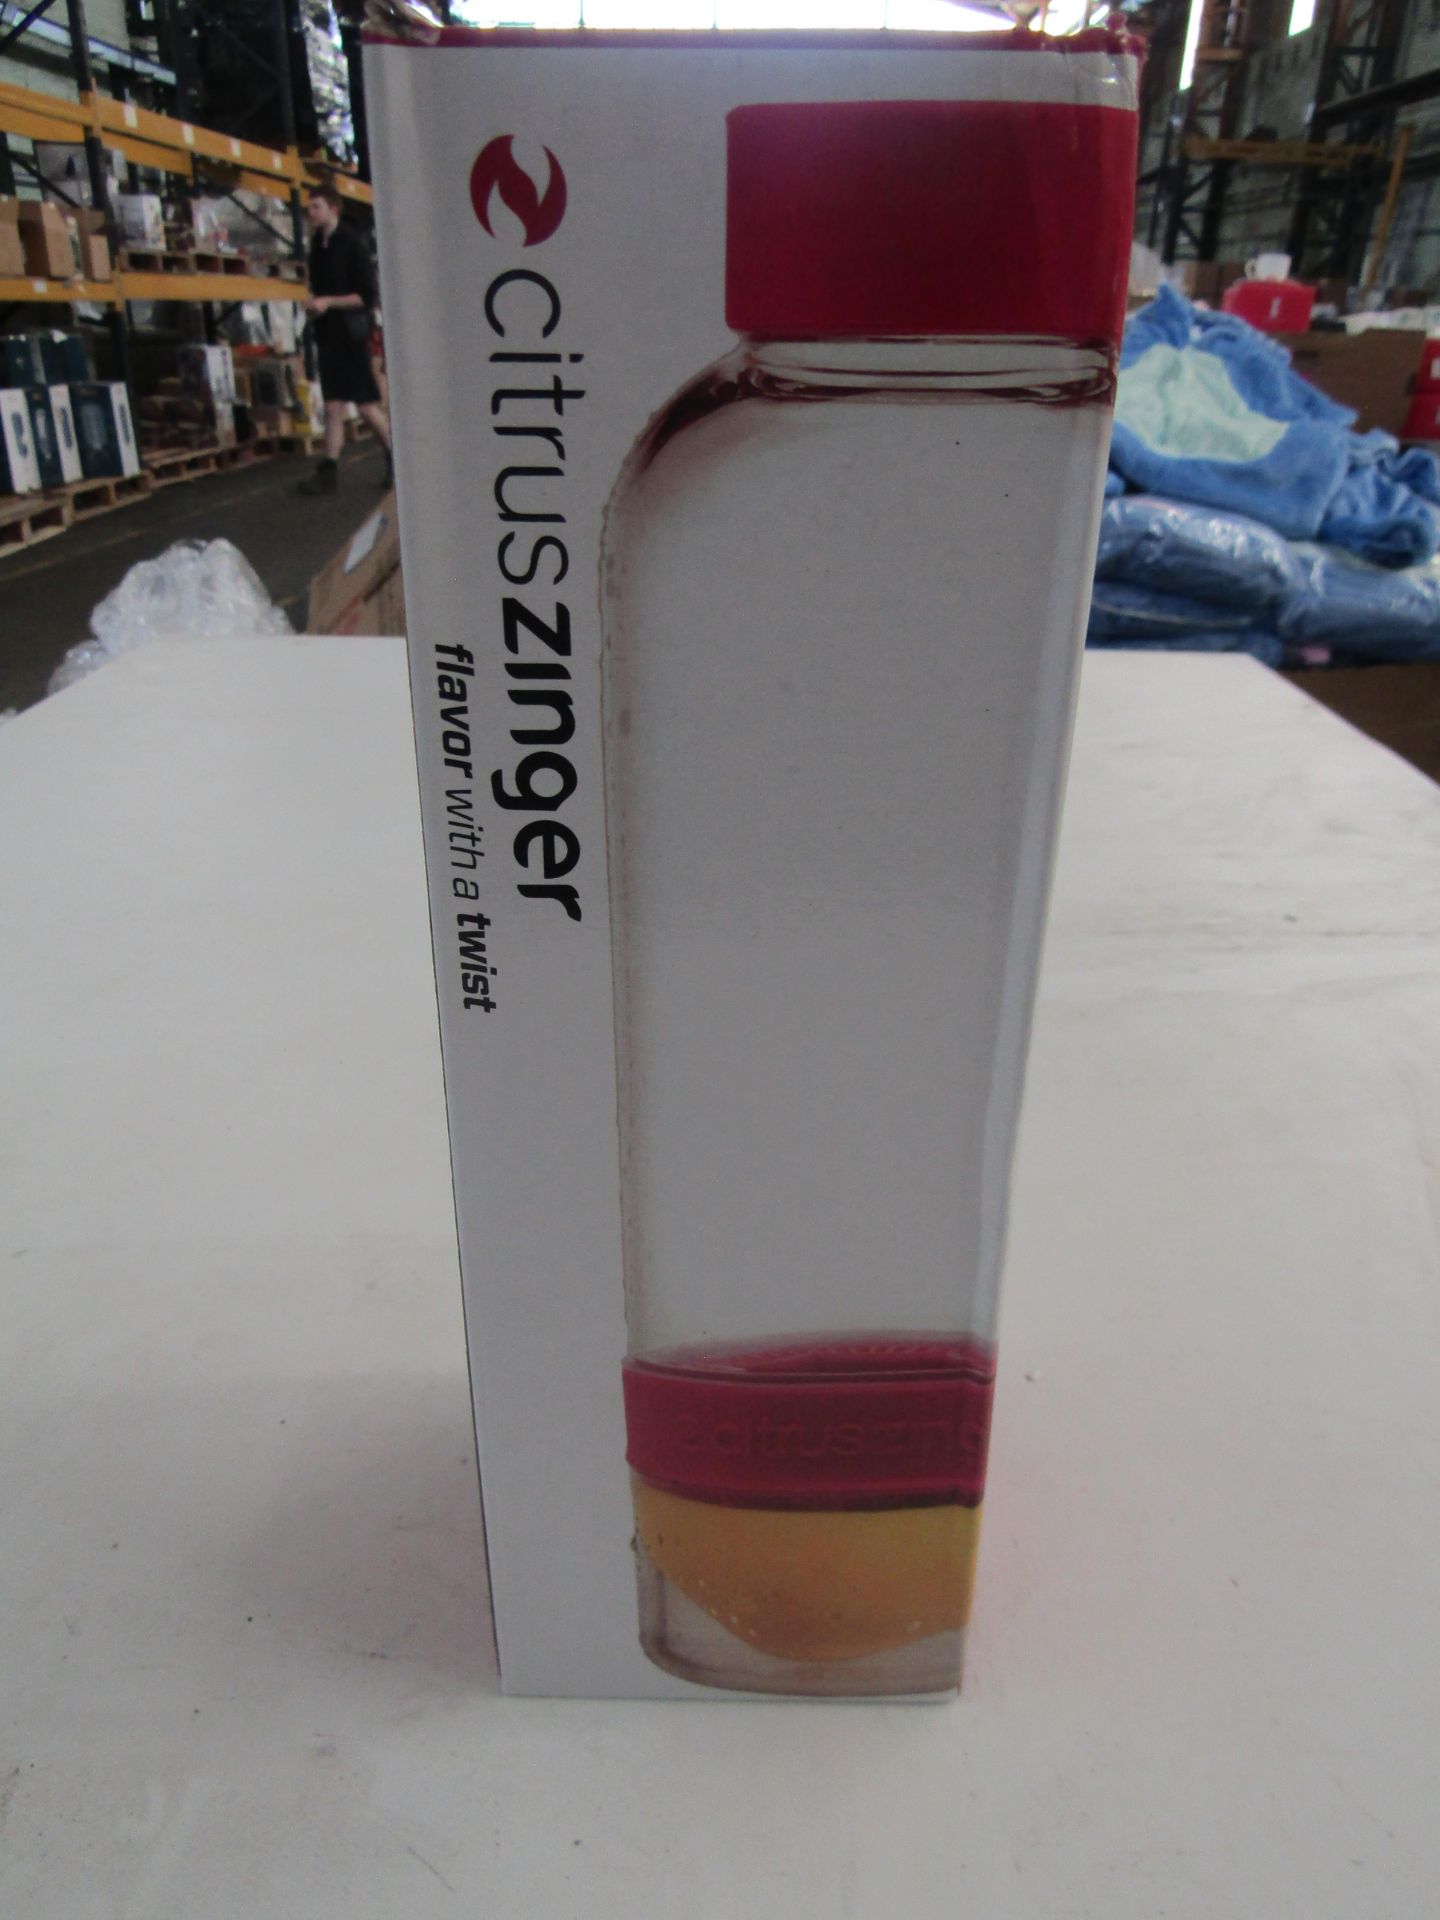 5x CitrusZinger - Infuser Water Bottles ( RED ) - New.